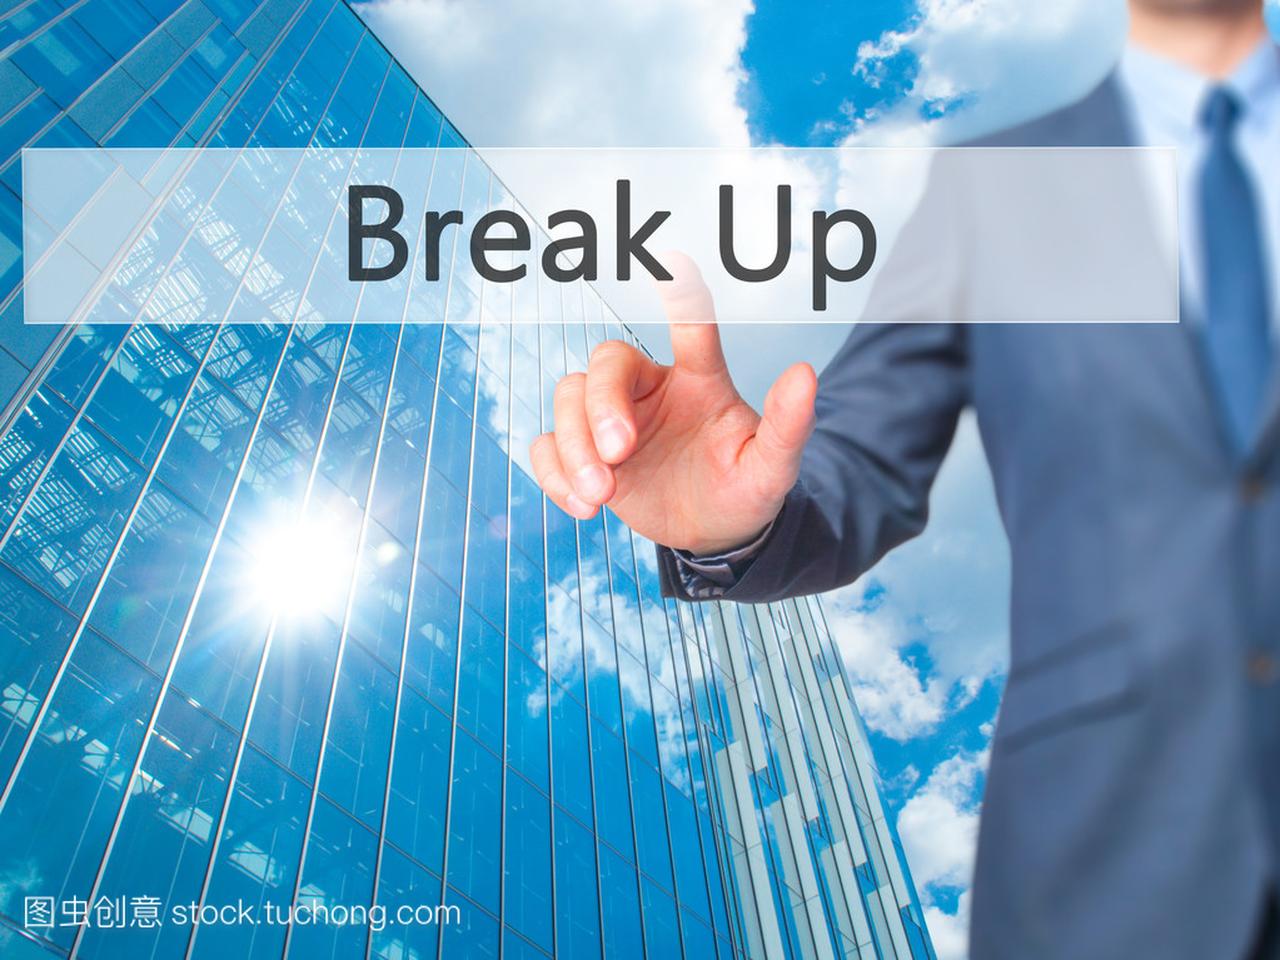 Break Up - Businessman hand touch button 